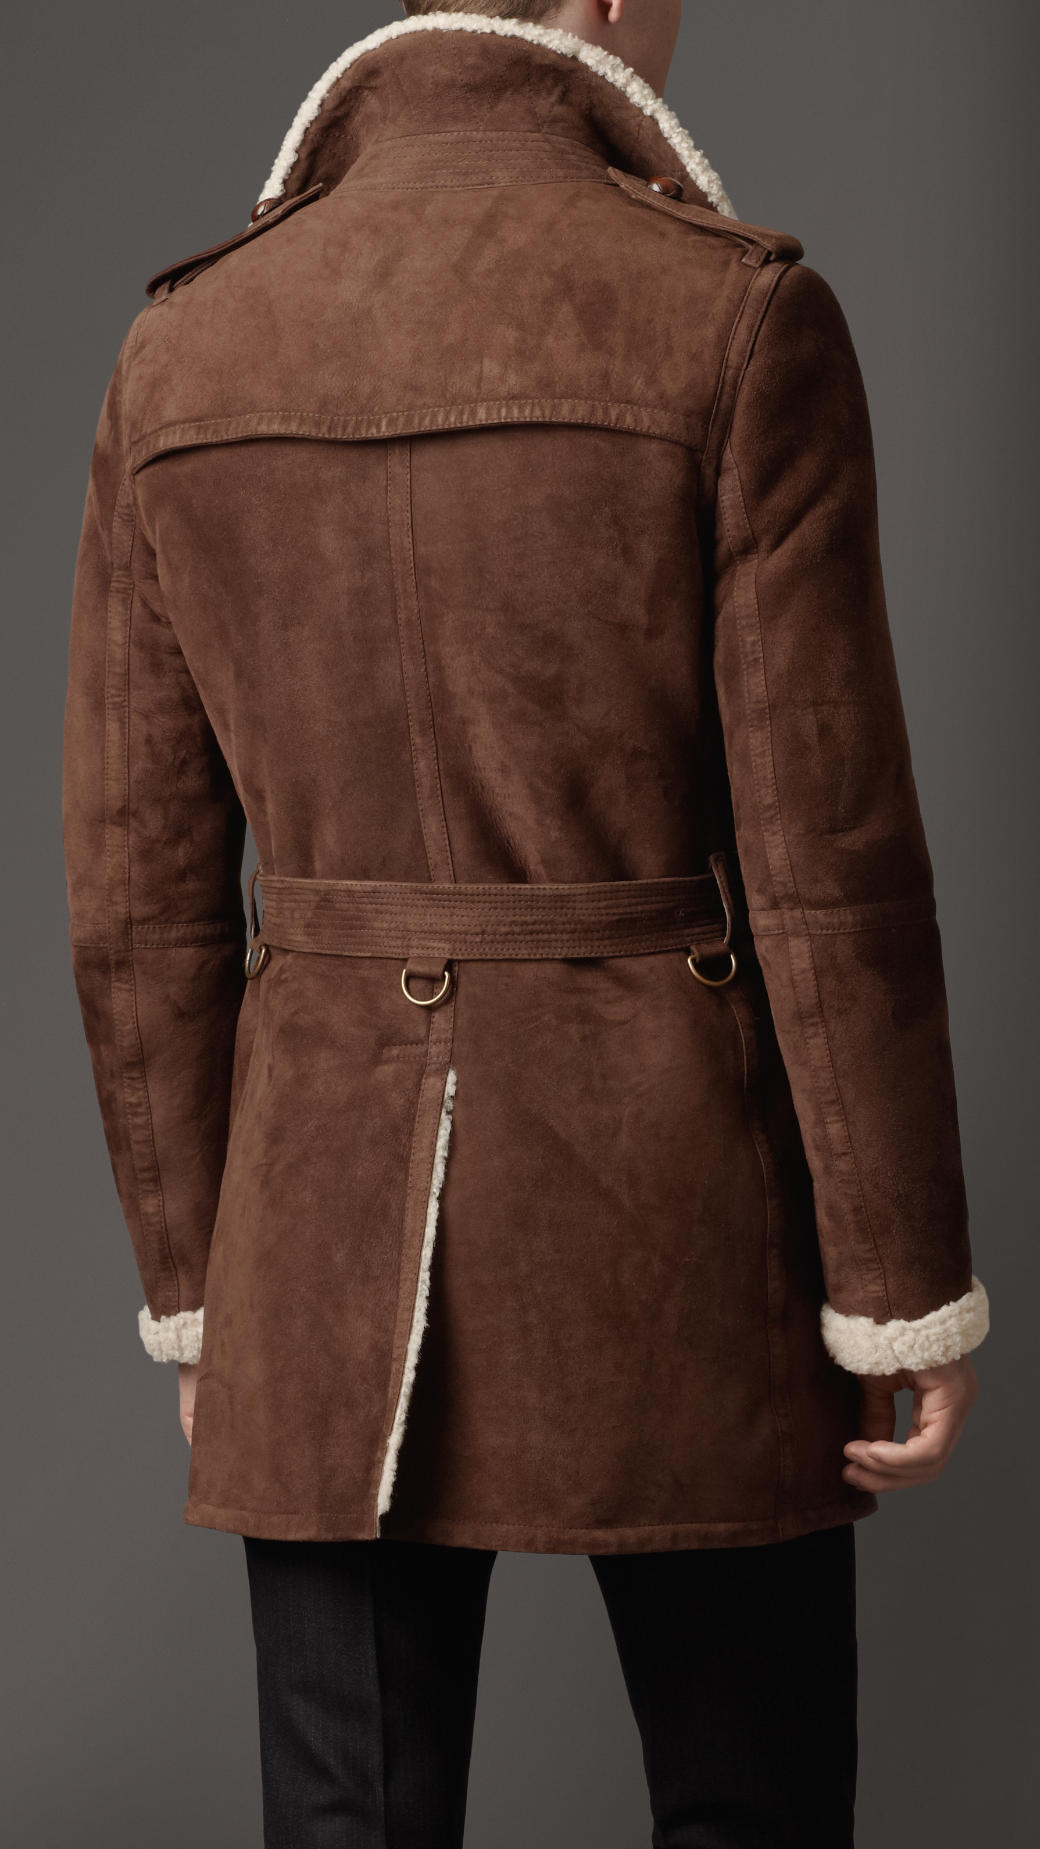 Burberry Heritage Sheepskin Coat in Brown for Men - Lyst